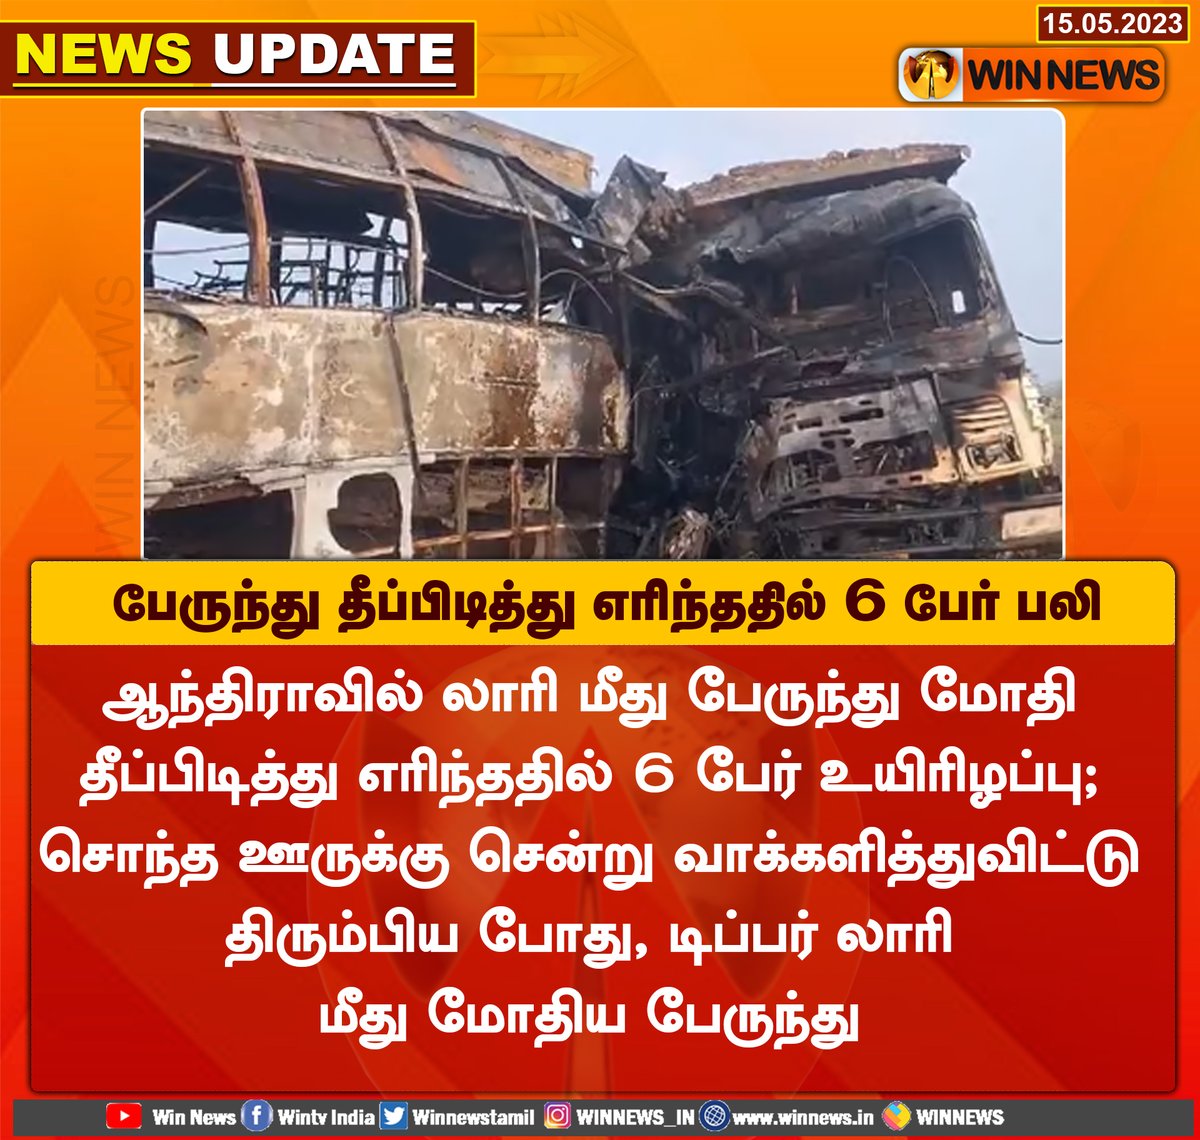 #NewsUpdate| ஆந்திராவில் லாரி மீது பேருந்து மோதி தீப்பிடித்து எரிந்ததில் 6 பேர் உயிரிழப்பு

#WinNews| #Andhra  #accident